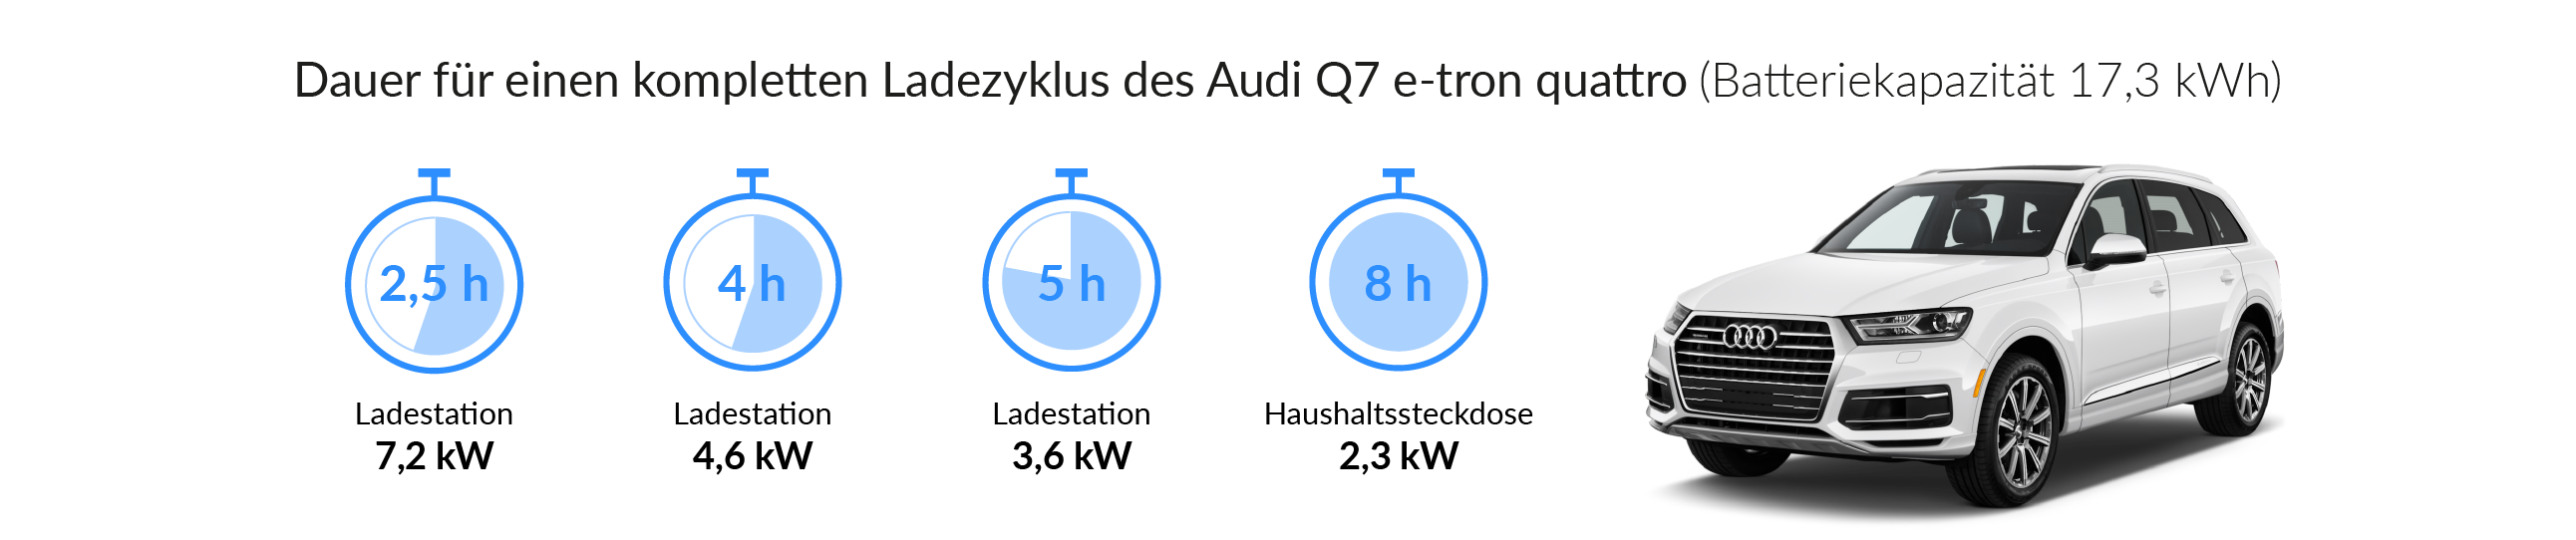 Ladezeiten des Audi Q7 e-tron quattro